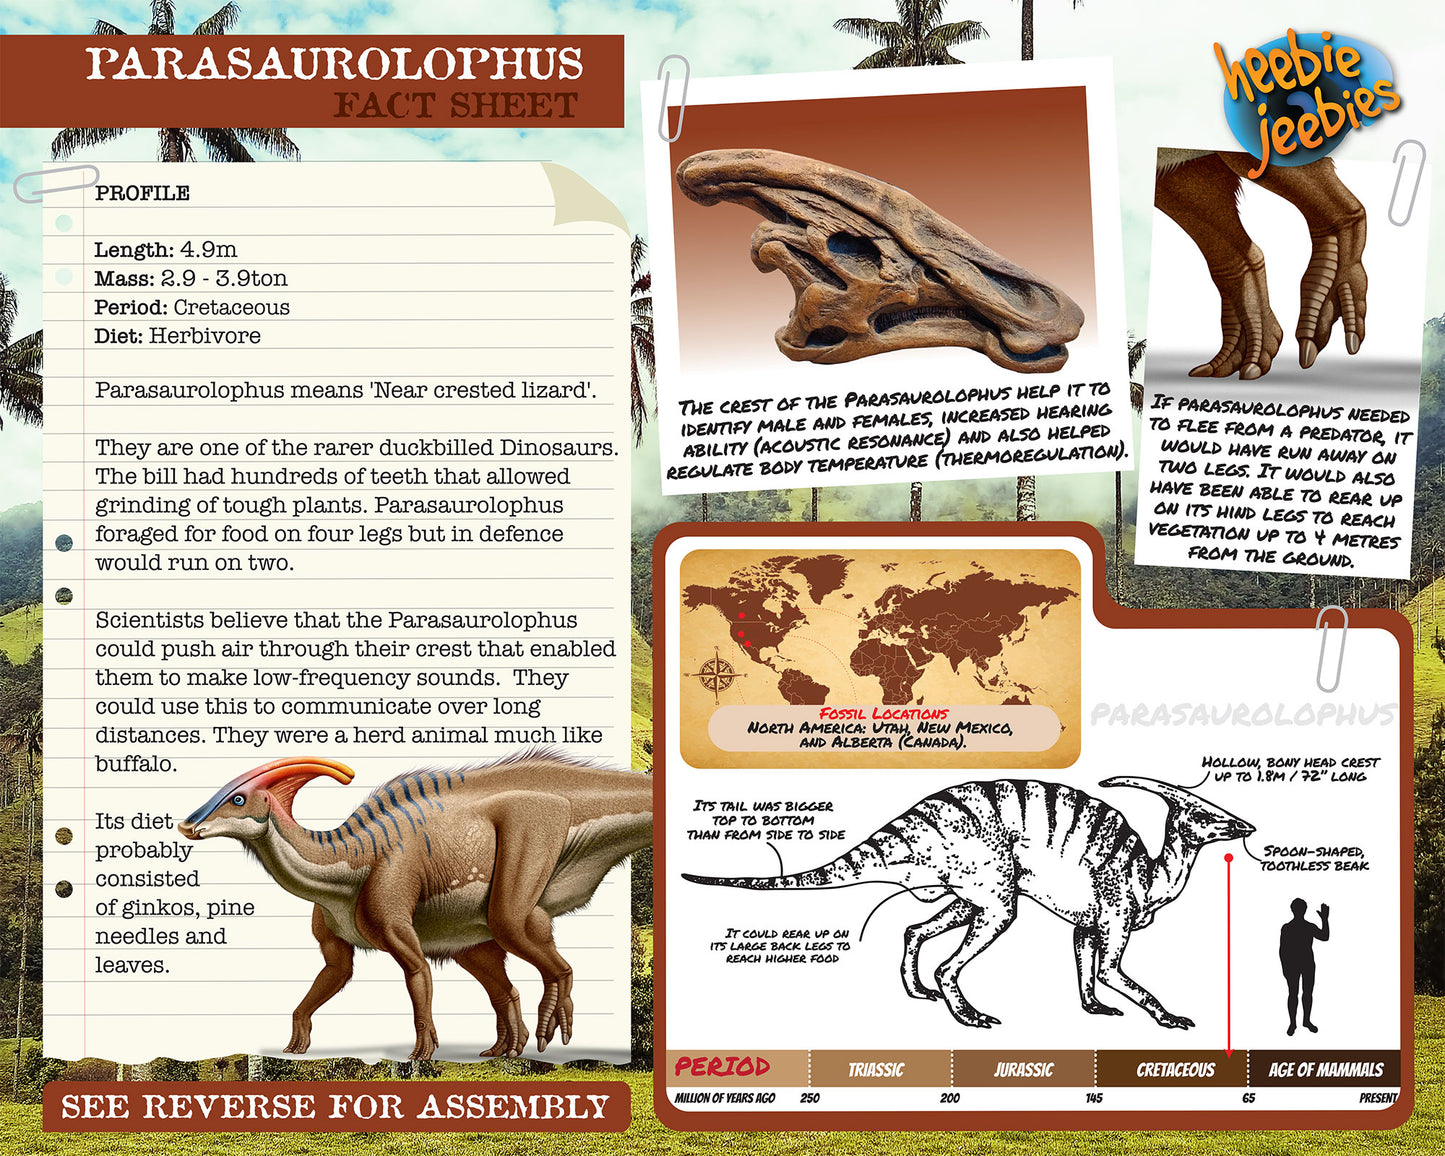 Parasaurolophus 3D Wood Modeling Kit